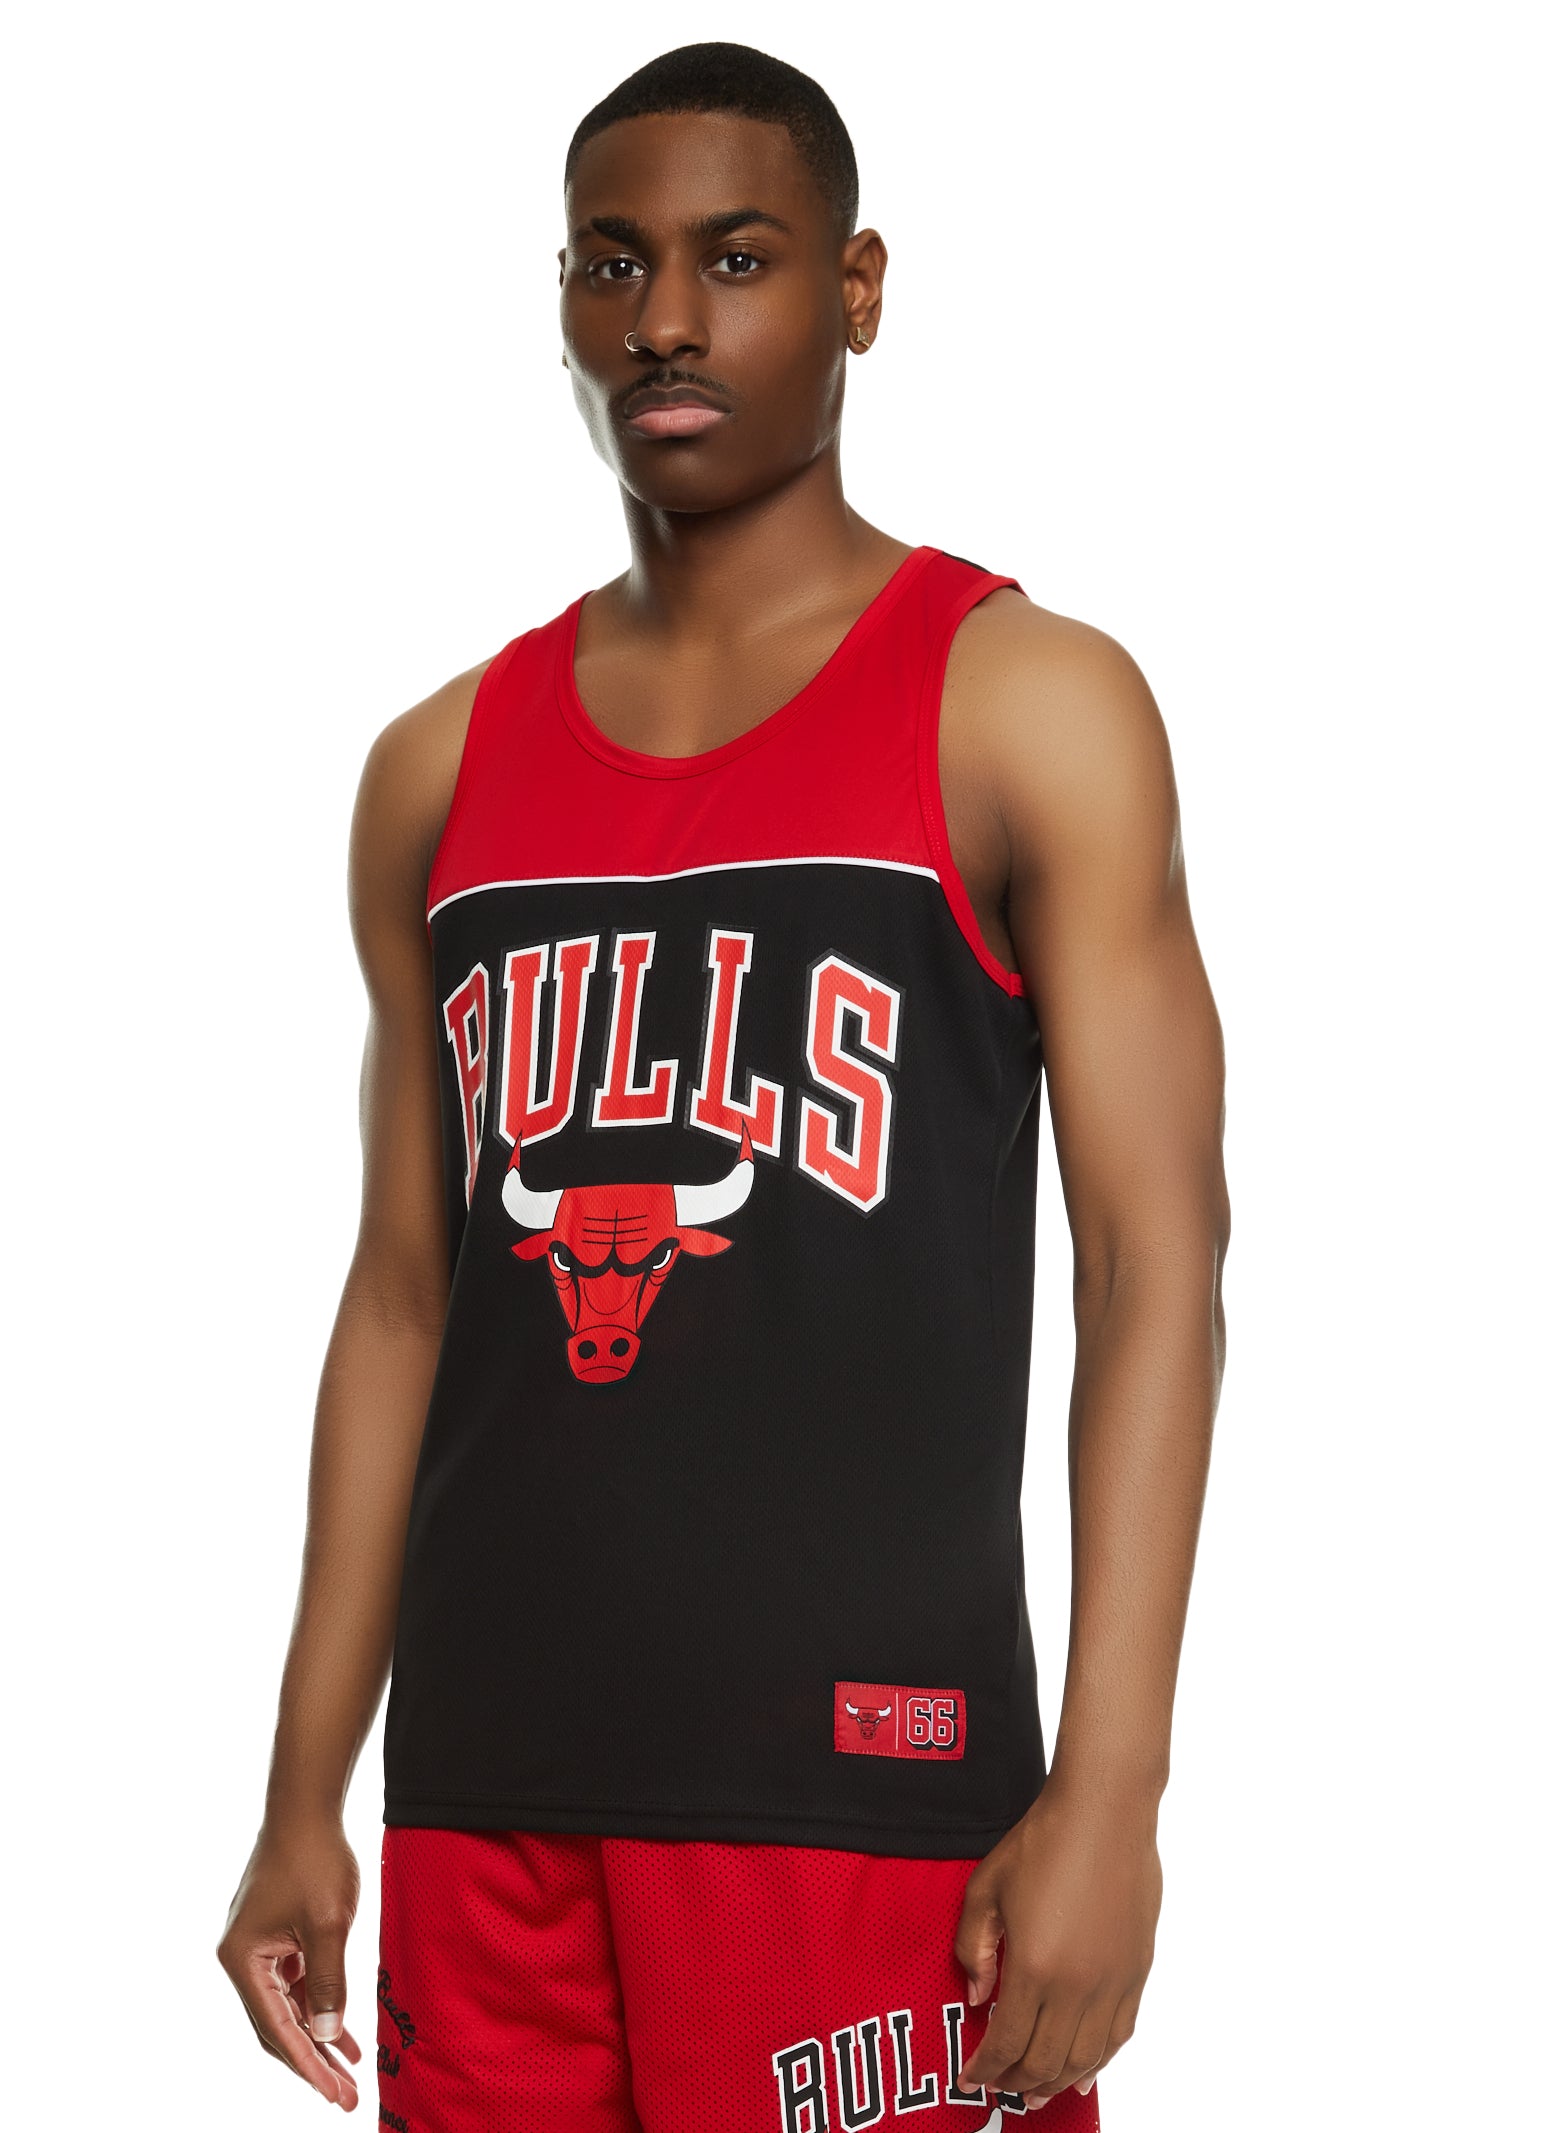 Womens Mens NBA Chicago Bulls Color Block Jersey, Black, Size S